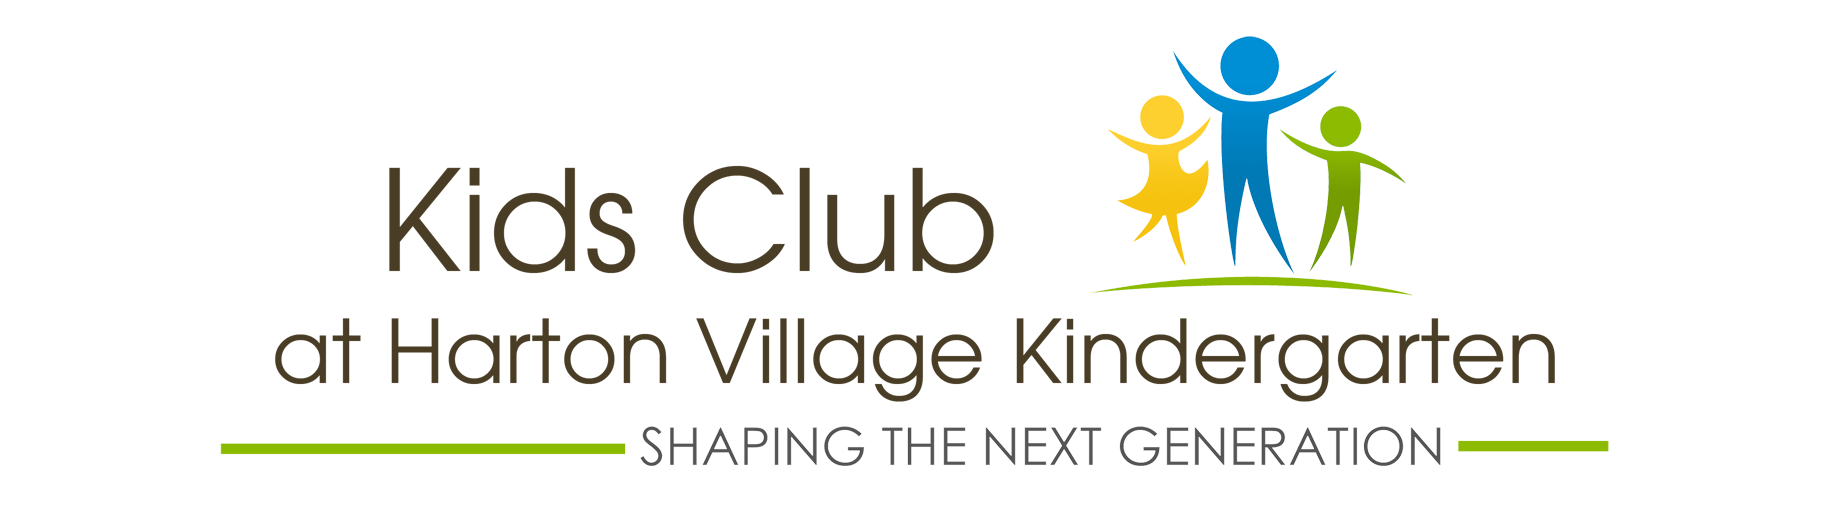 Harton Village Kindergarten Kids Club logo